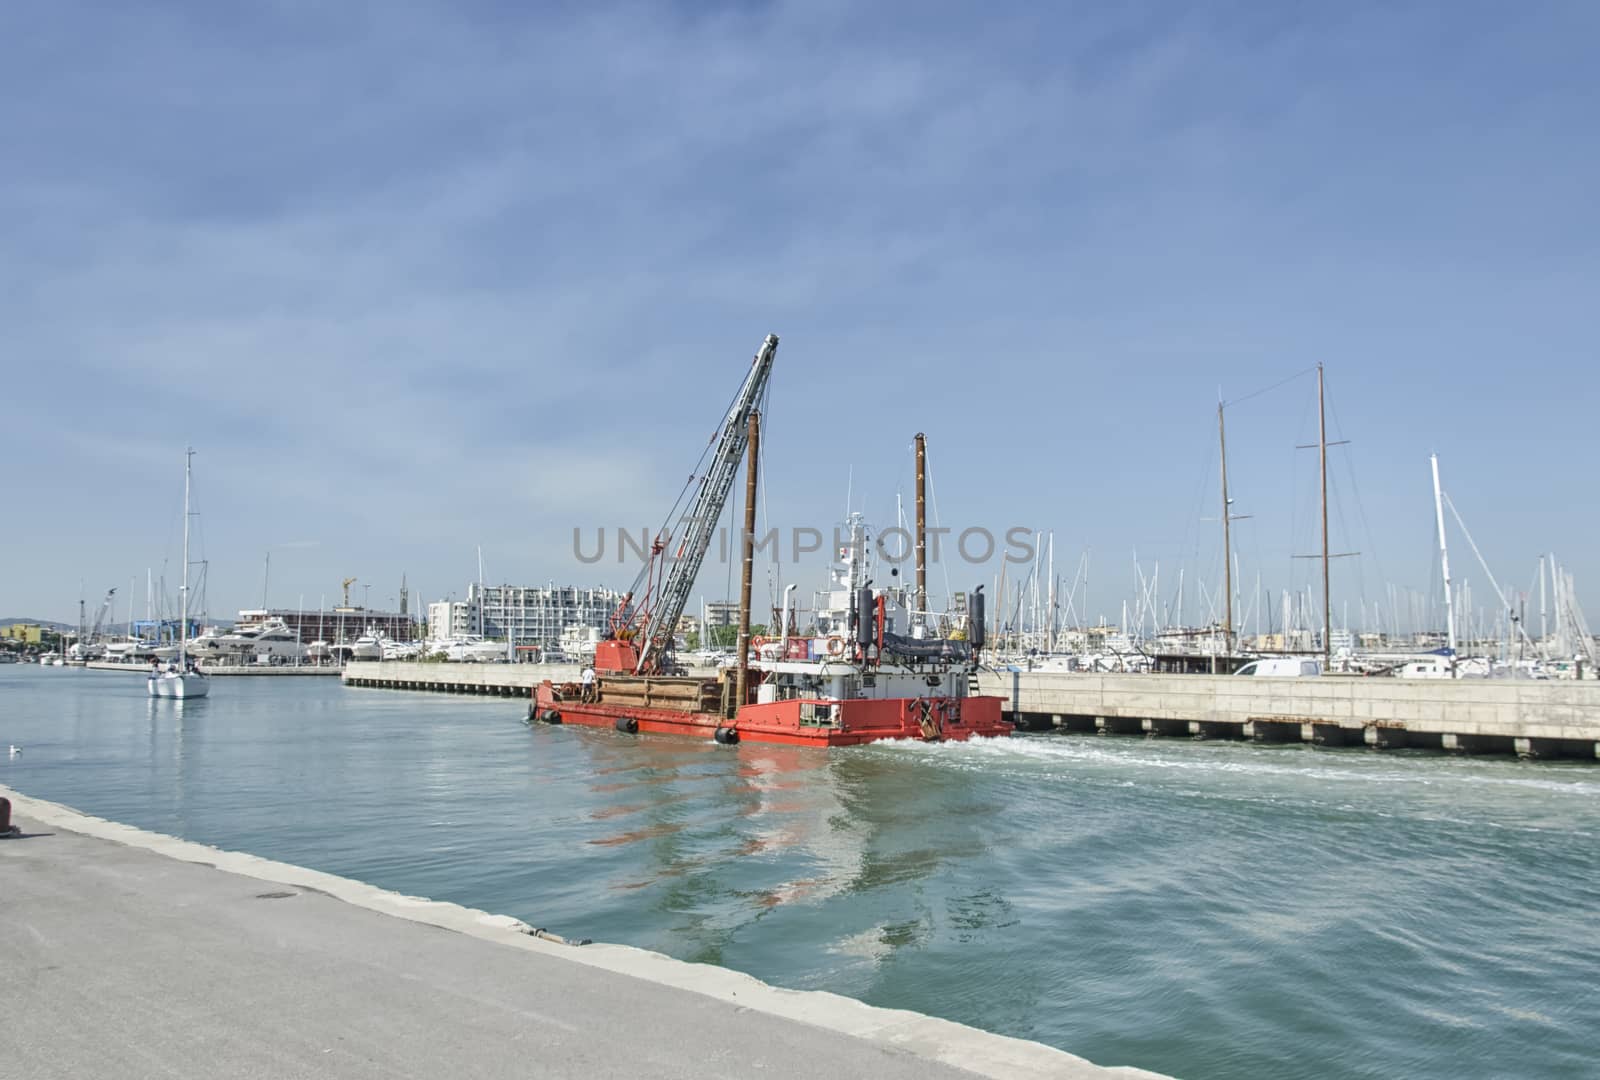 View of a dredger coming into Rimini port